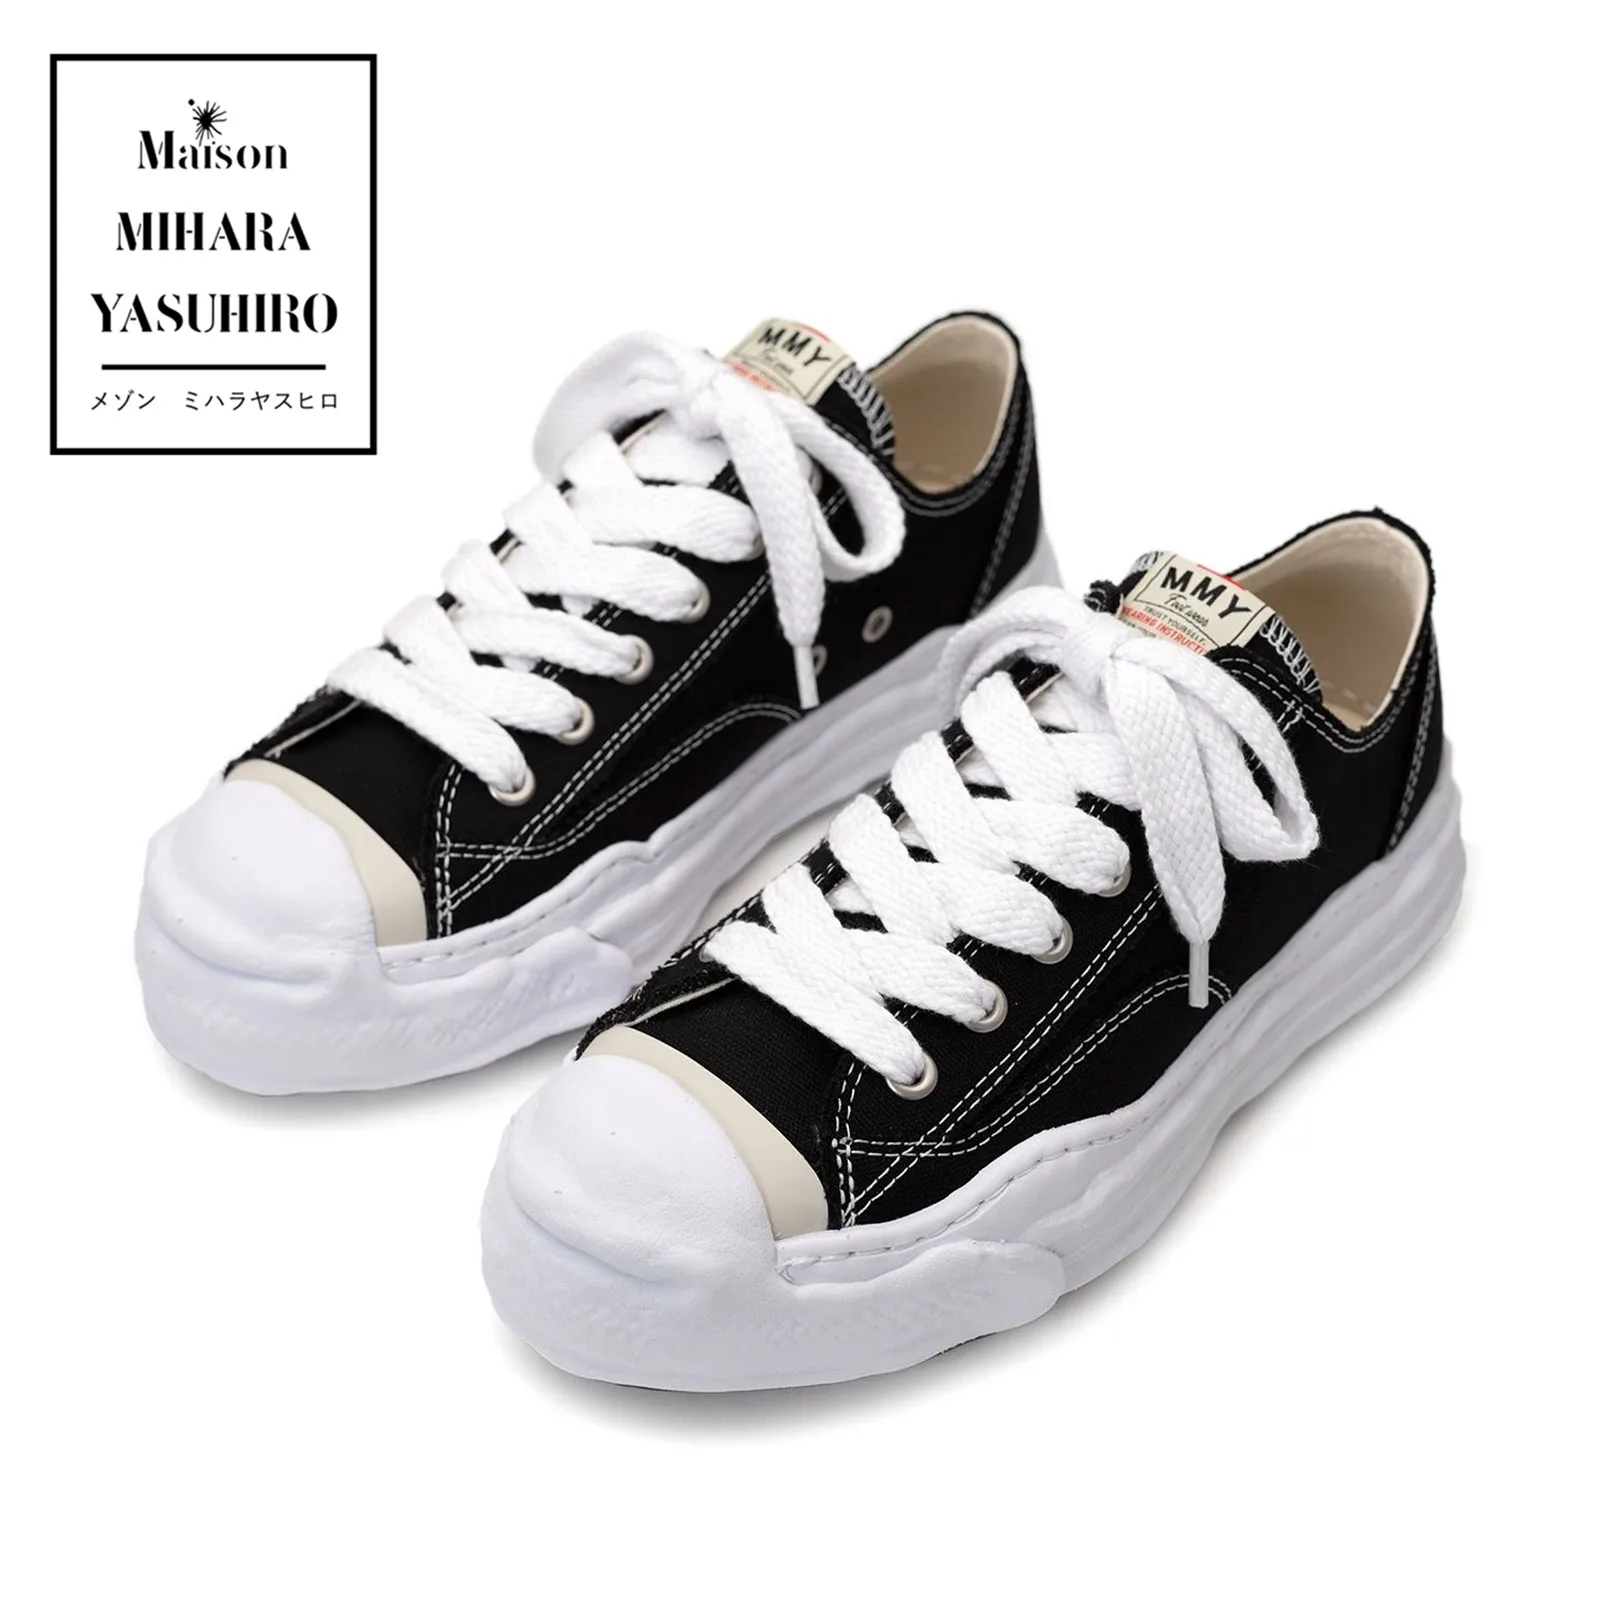 

MMY Maison MIHARA YASUHIRO HANK VL OG Sole Canvas Low Sneaker Black White Men's & Women's Shoes